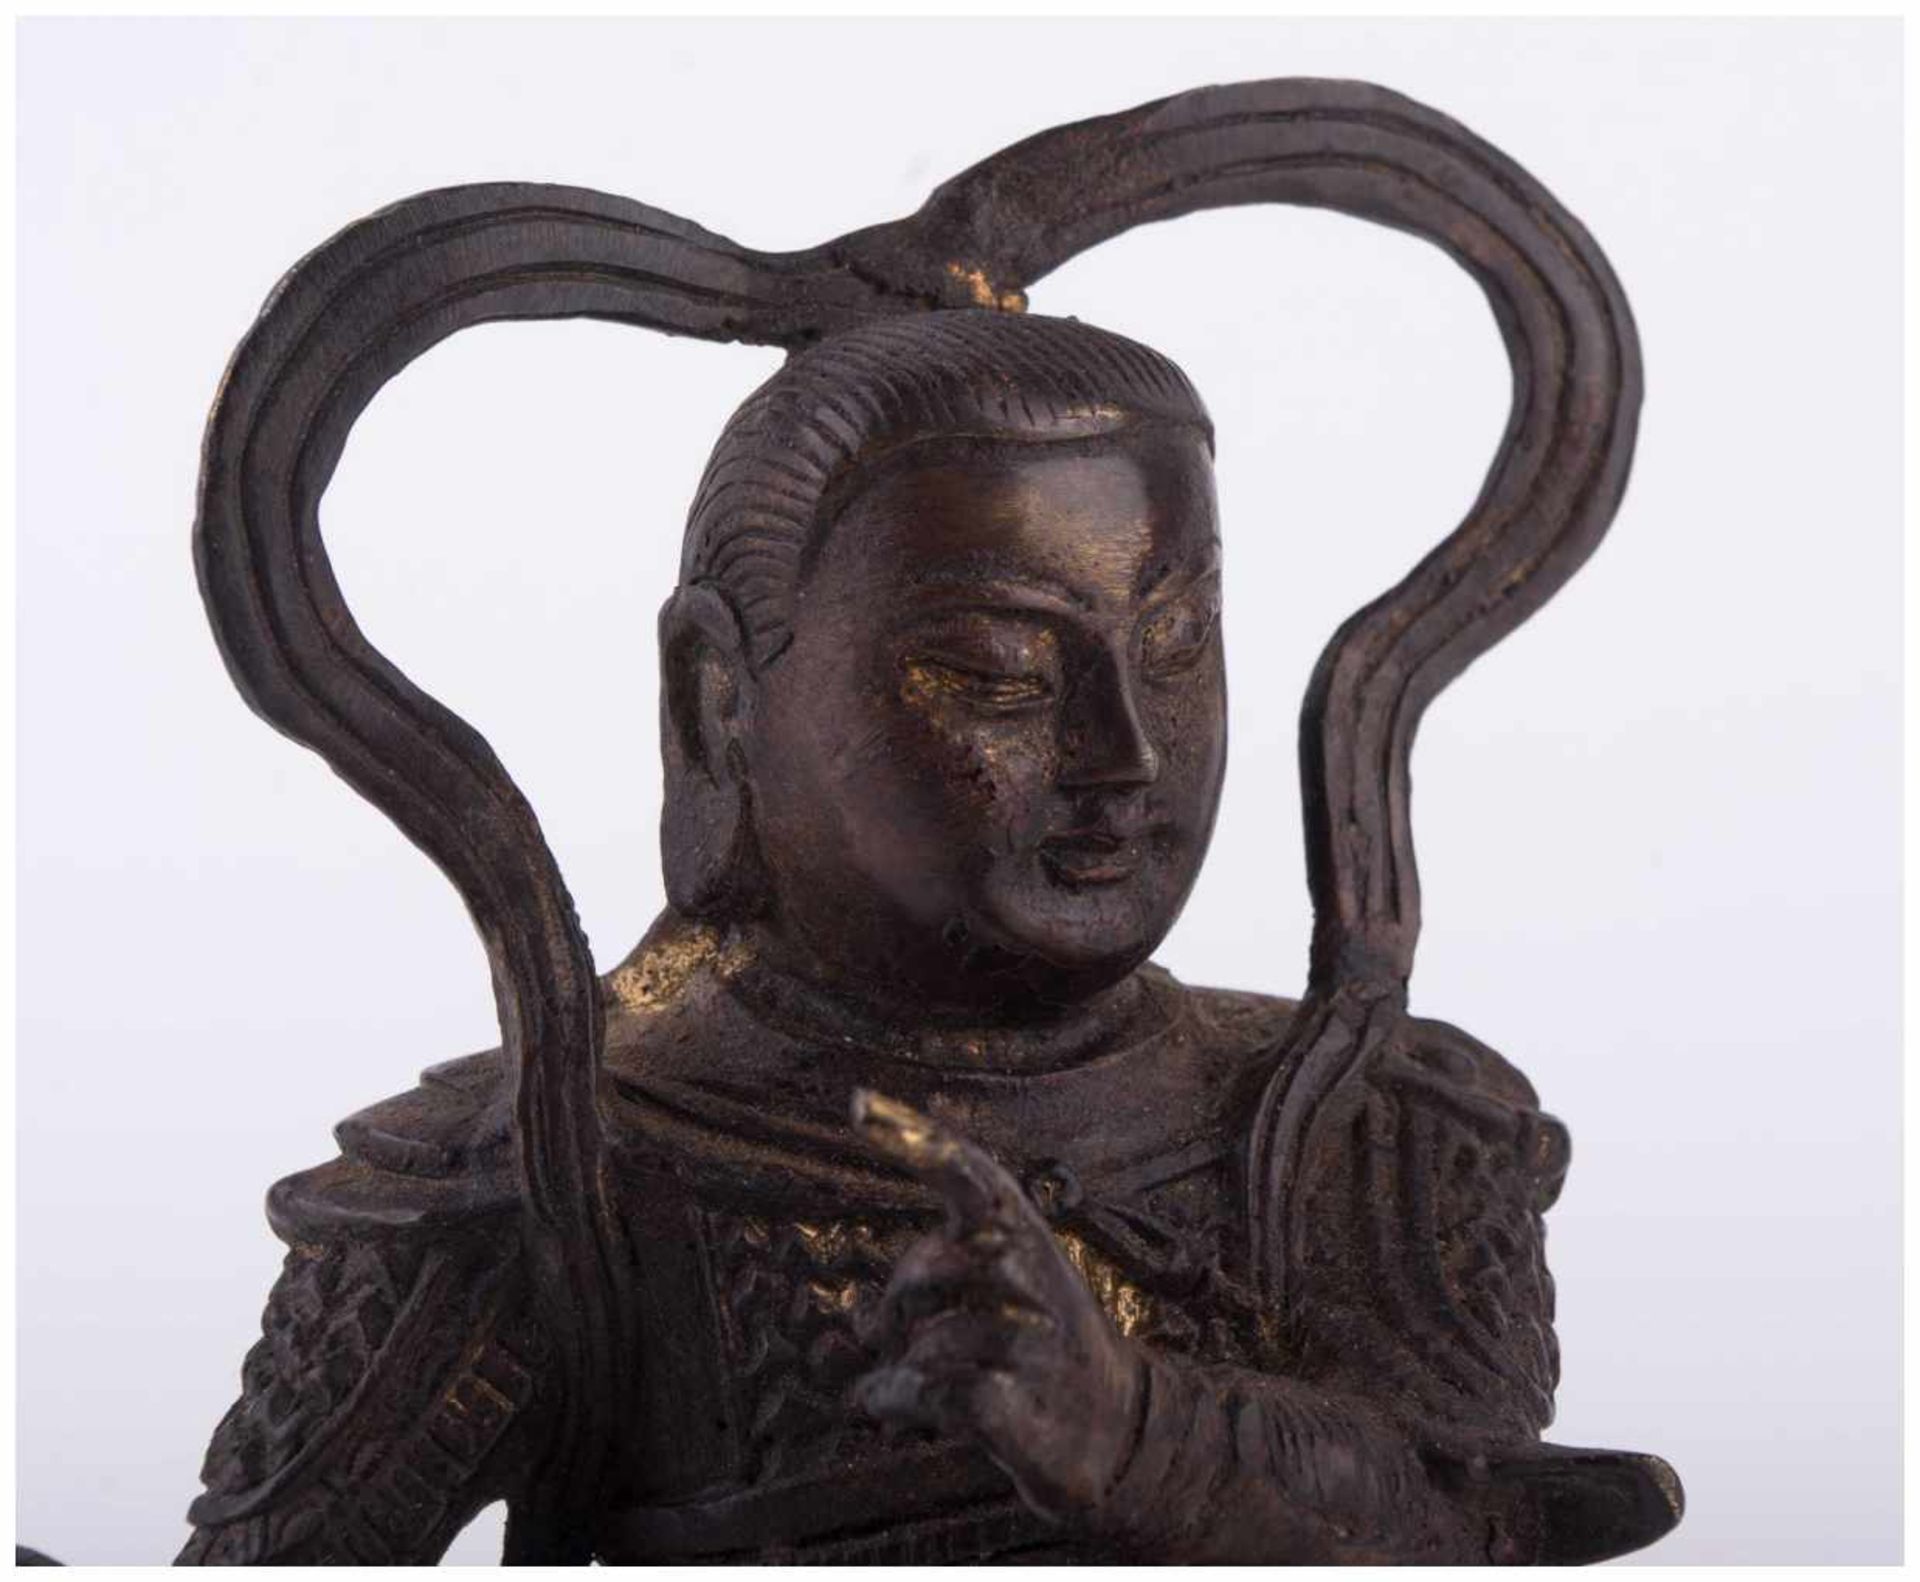 Alte Skulptur China / Old sculpture, China - Bronze, braun Patina mit Resten alter [...] - Image 14 of 14